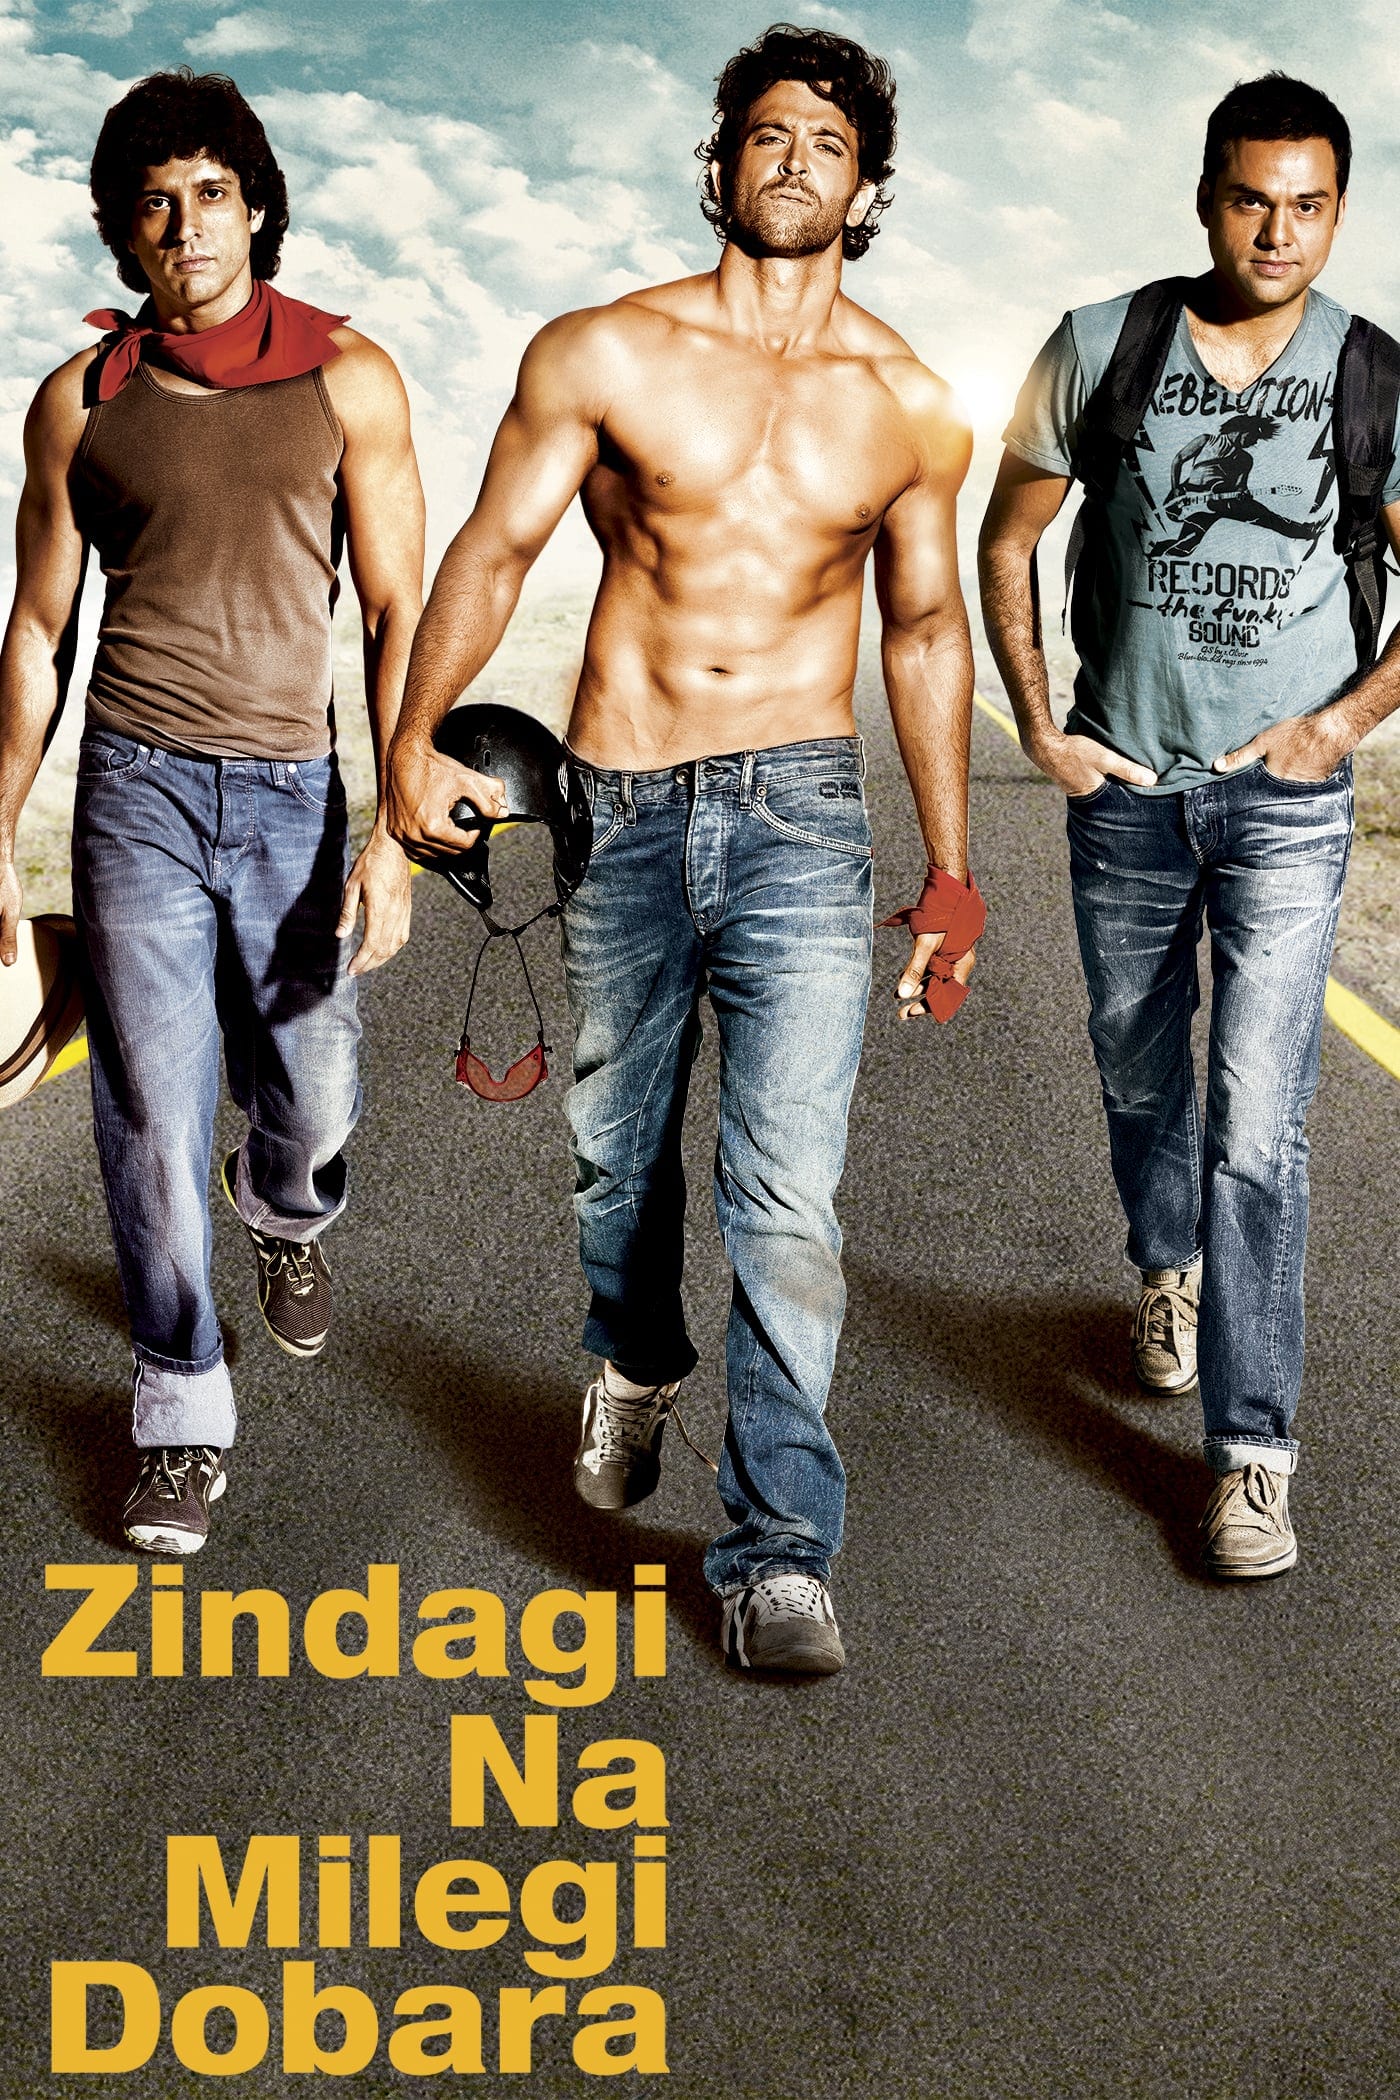 Poster for the movie "Zindagi Na Milegi Dobara"